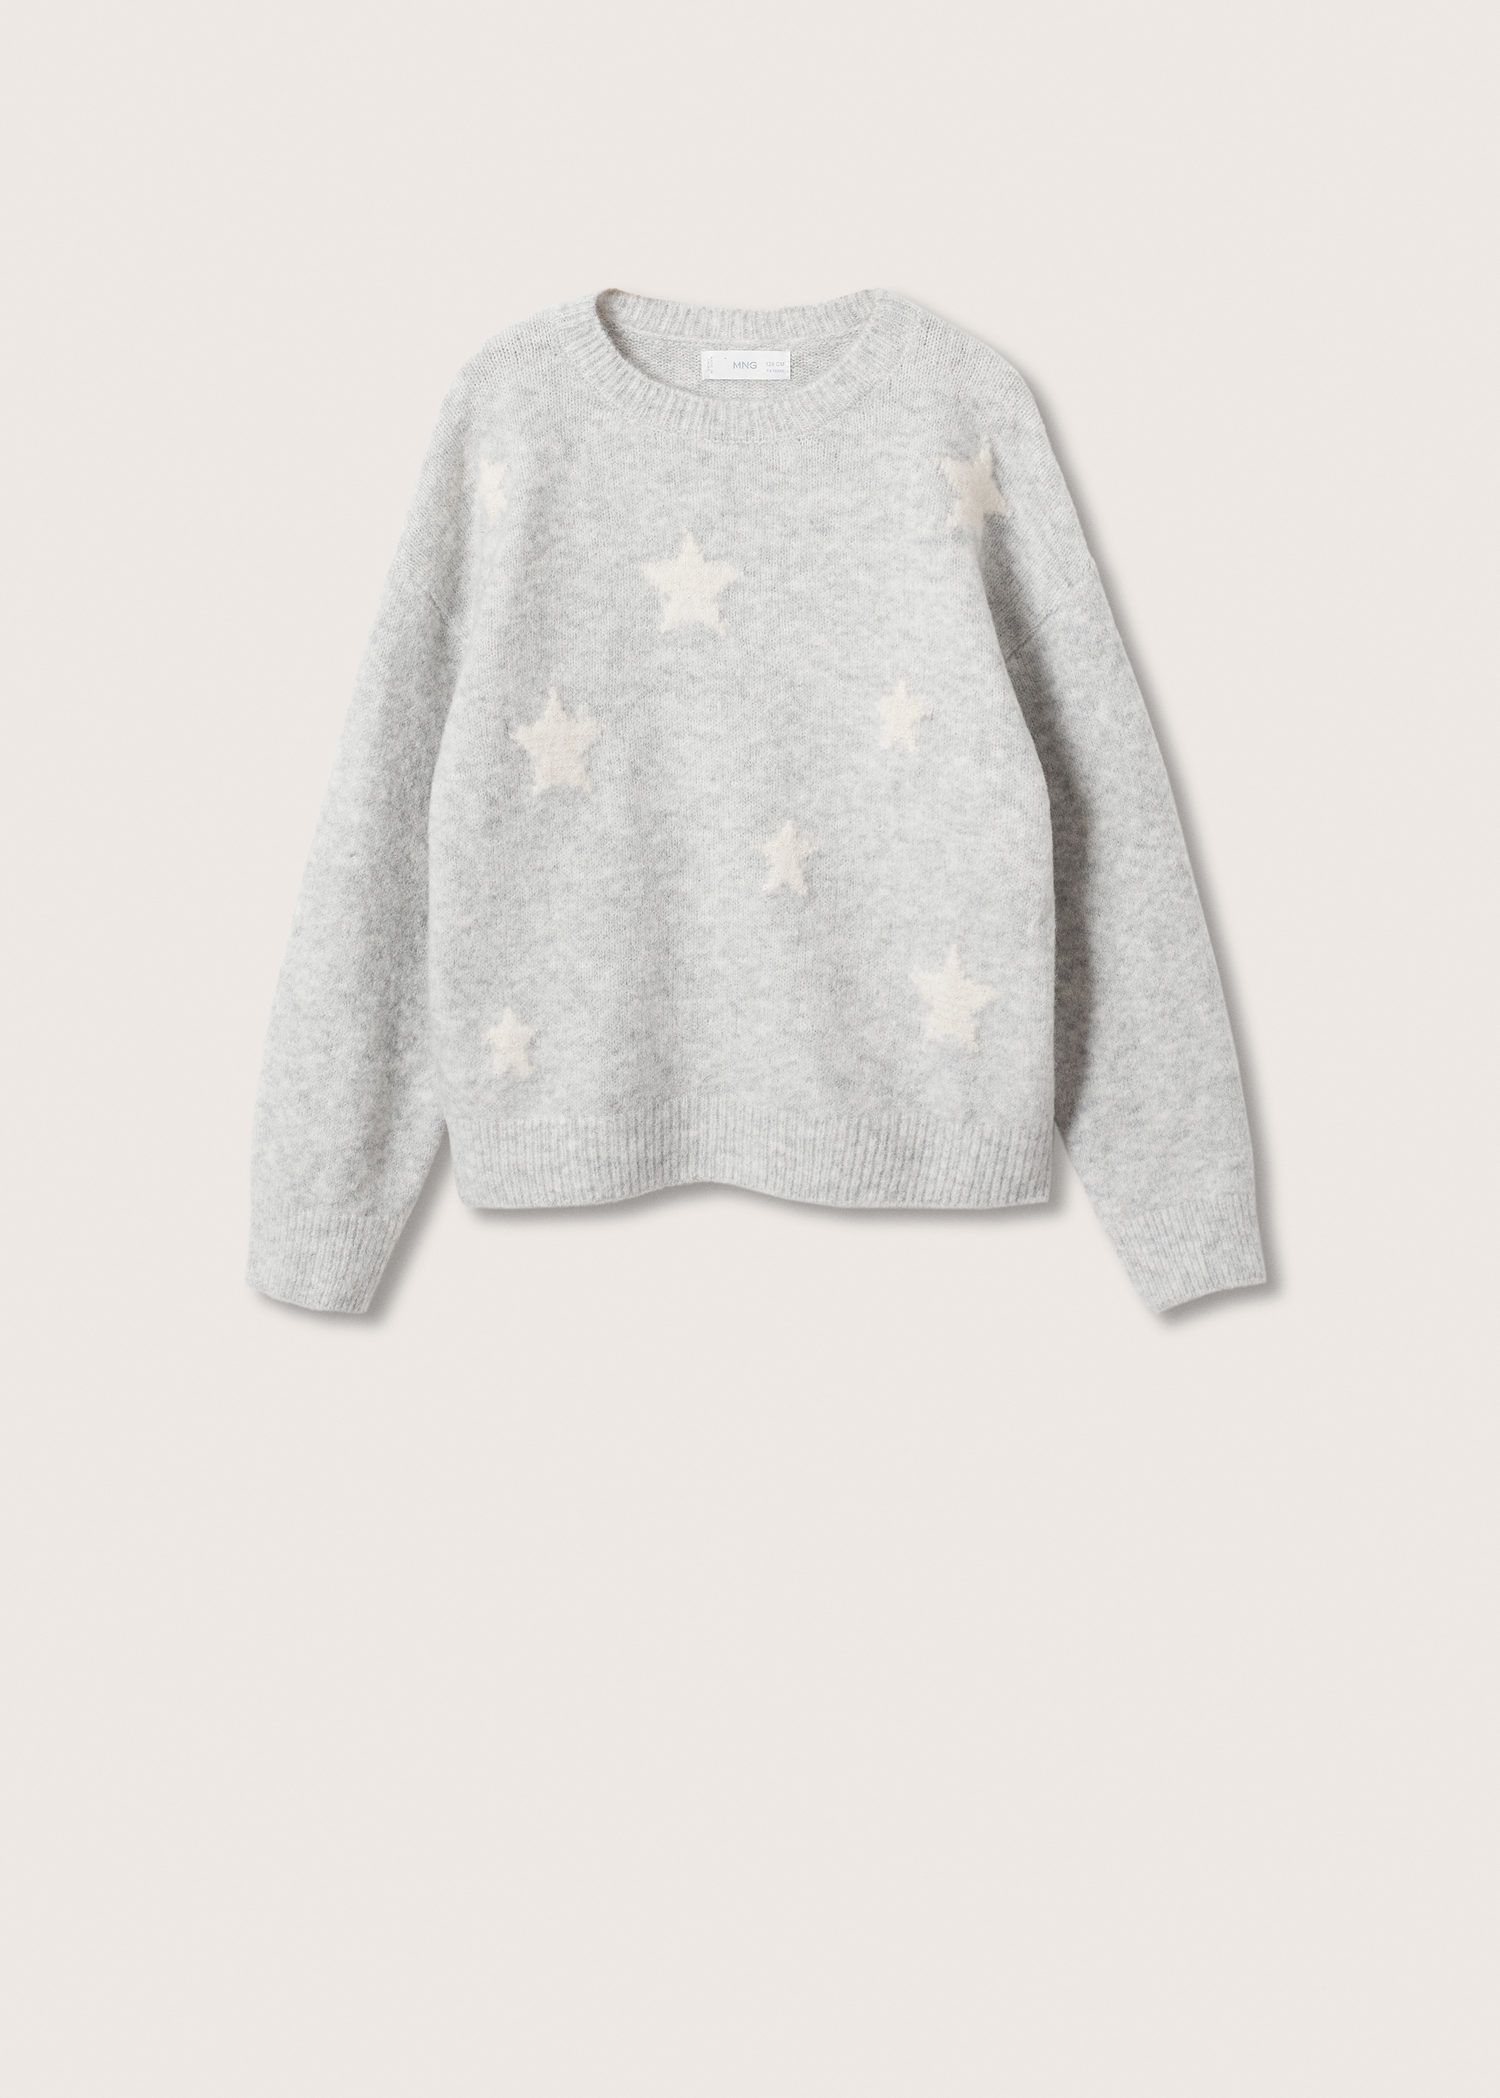 Mango Stars Knitted Sweater